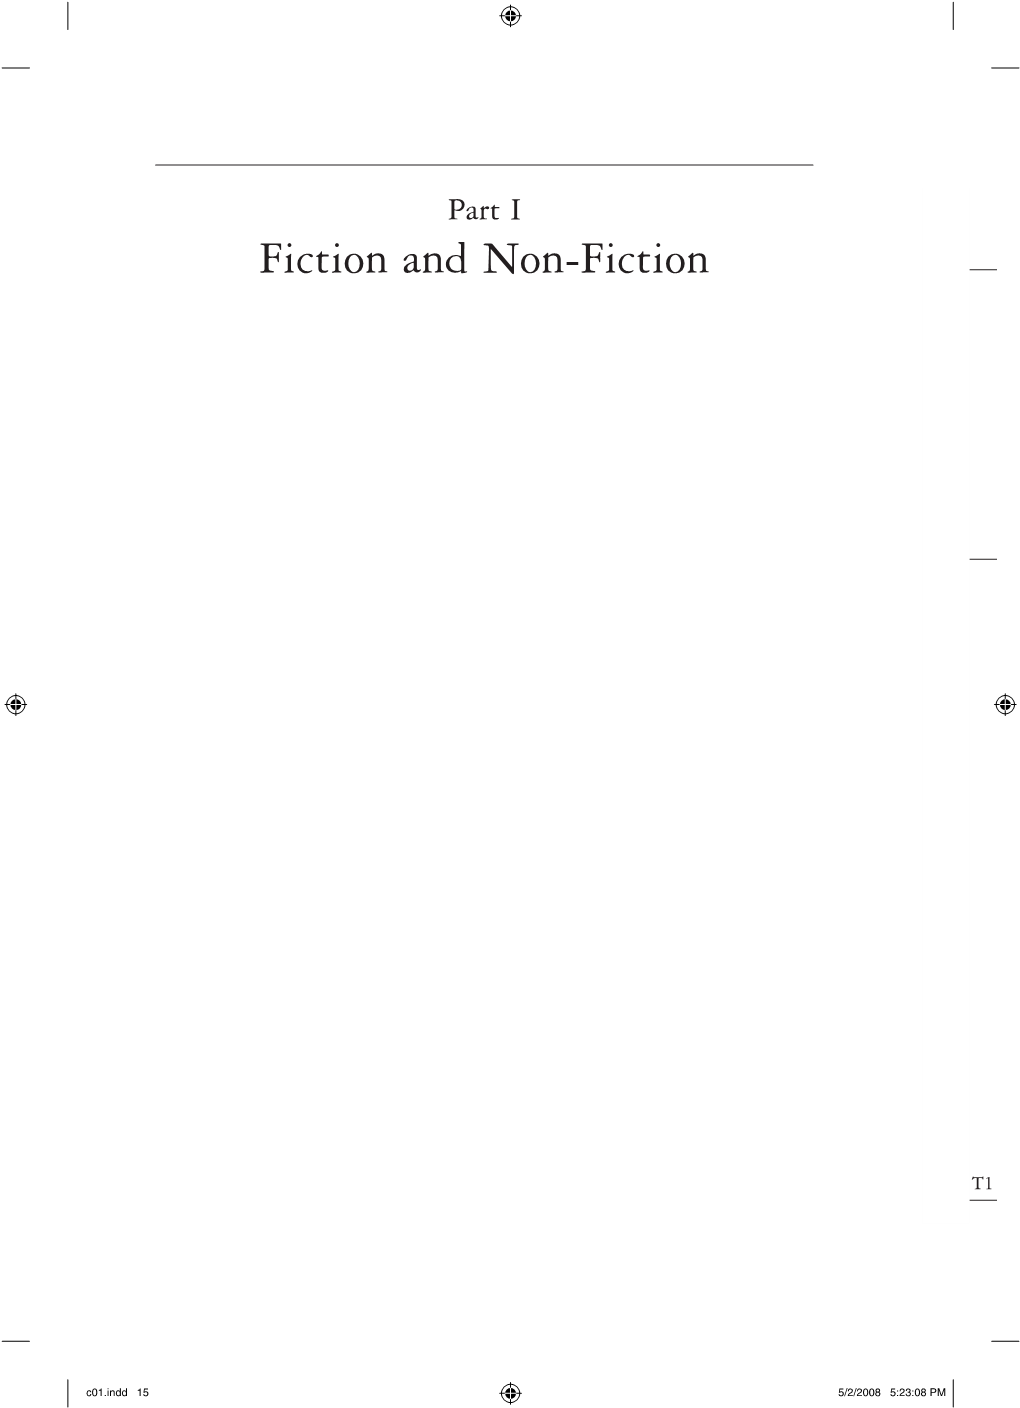 Fiction and Non-Fiction